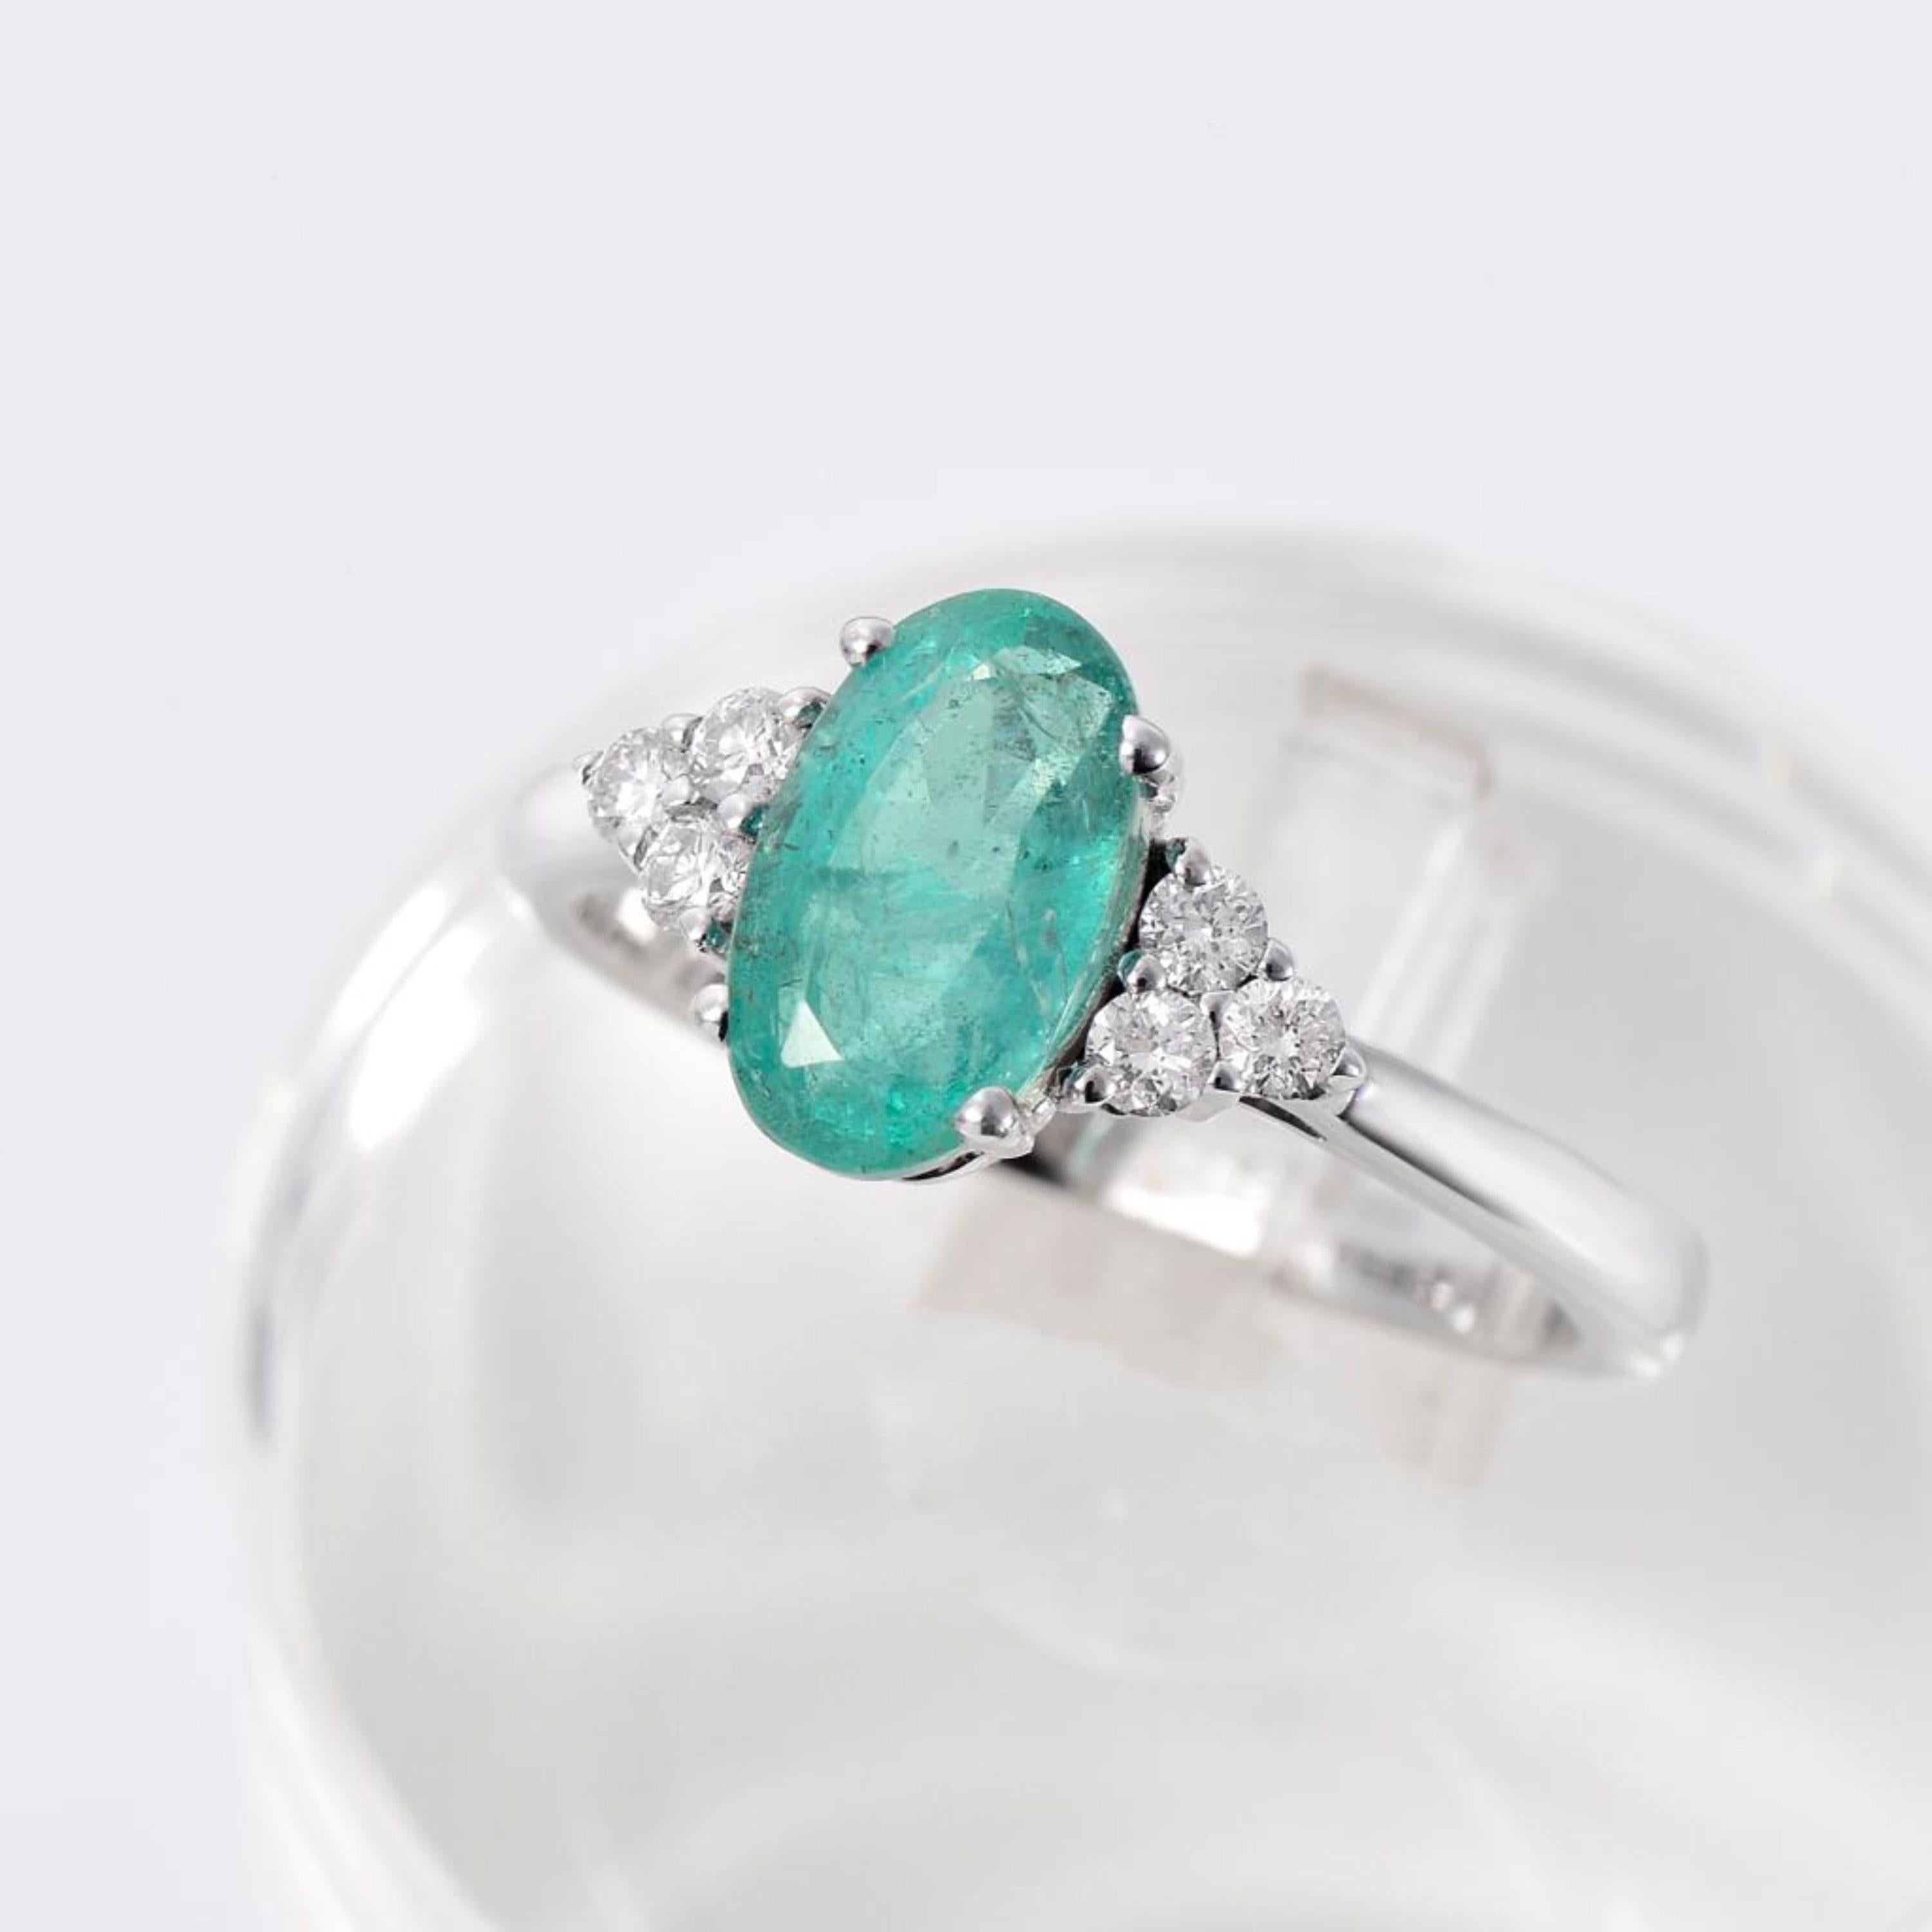 For Sale:  Antique White Gold 2 Carat Emerald Engagement Ring, Unique Diamond Wedding Ring 2